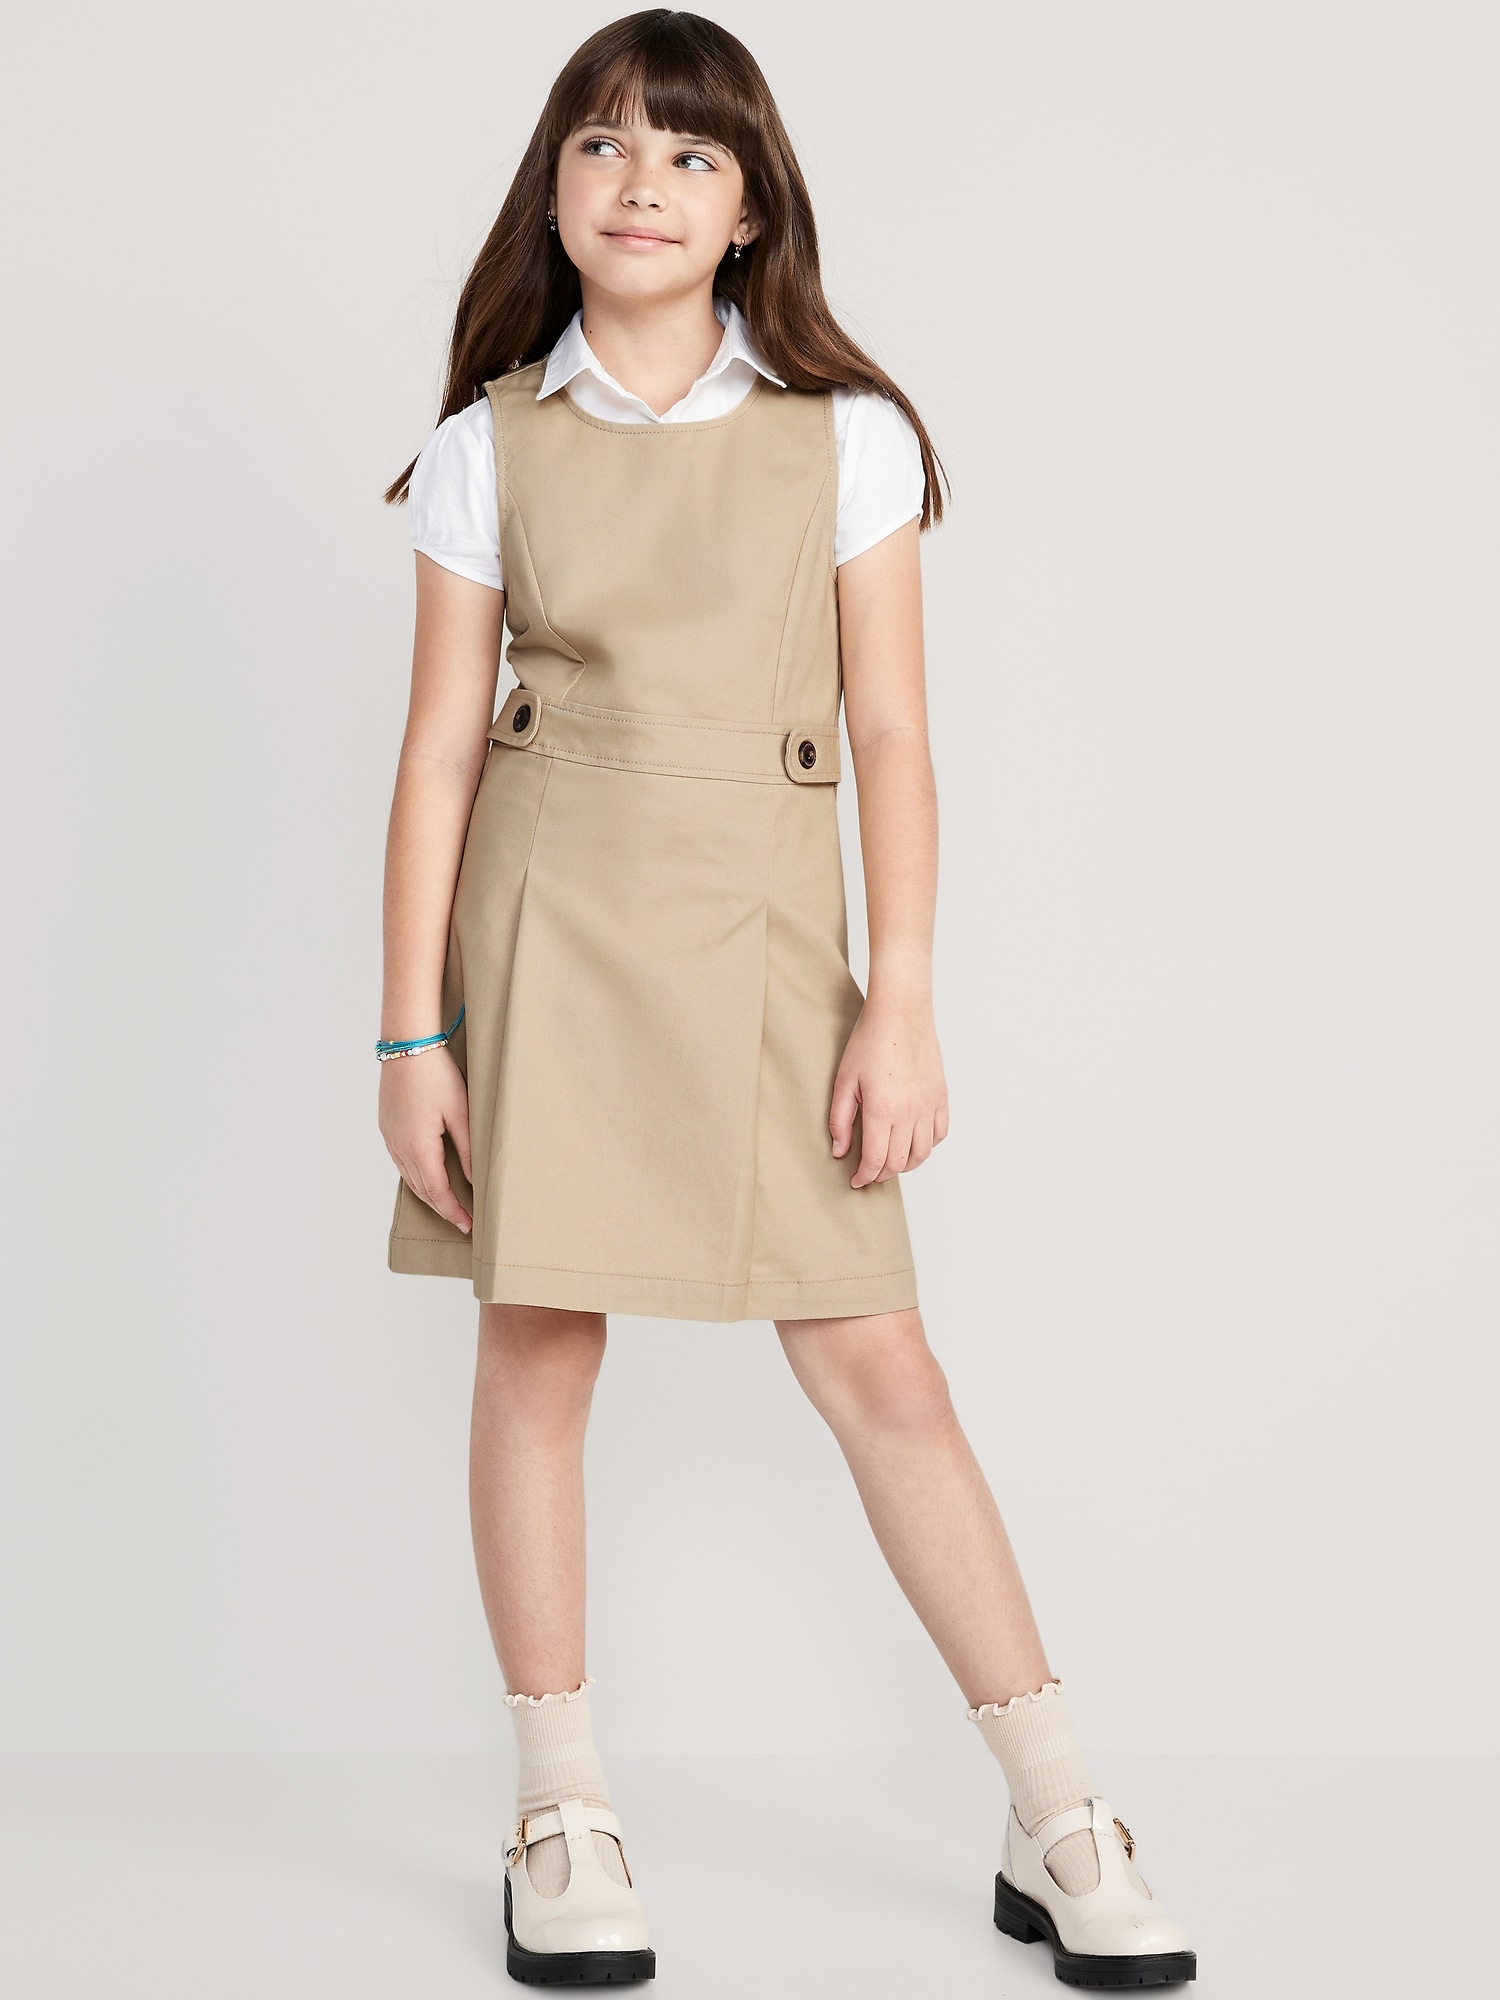 Lila School Uniform Dress with Pockets | Browse Our Stylish Girls' Uniforms